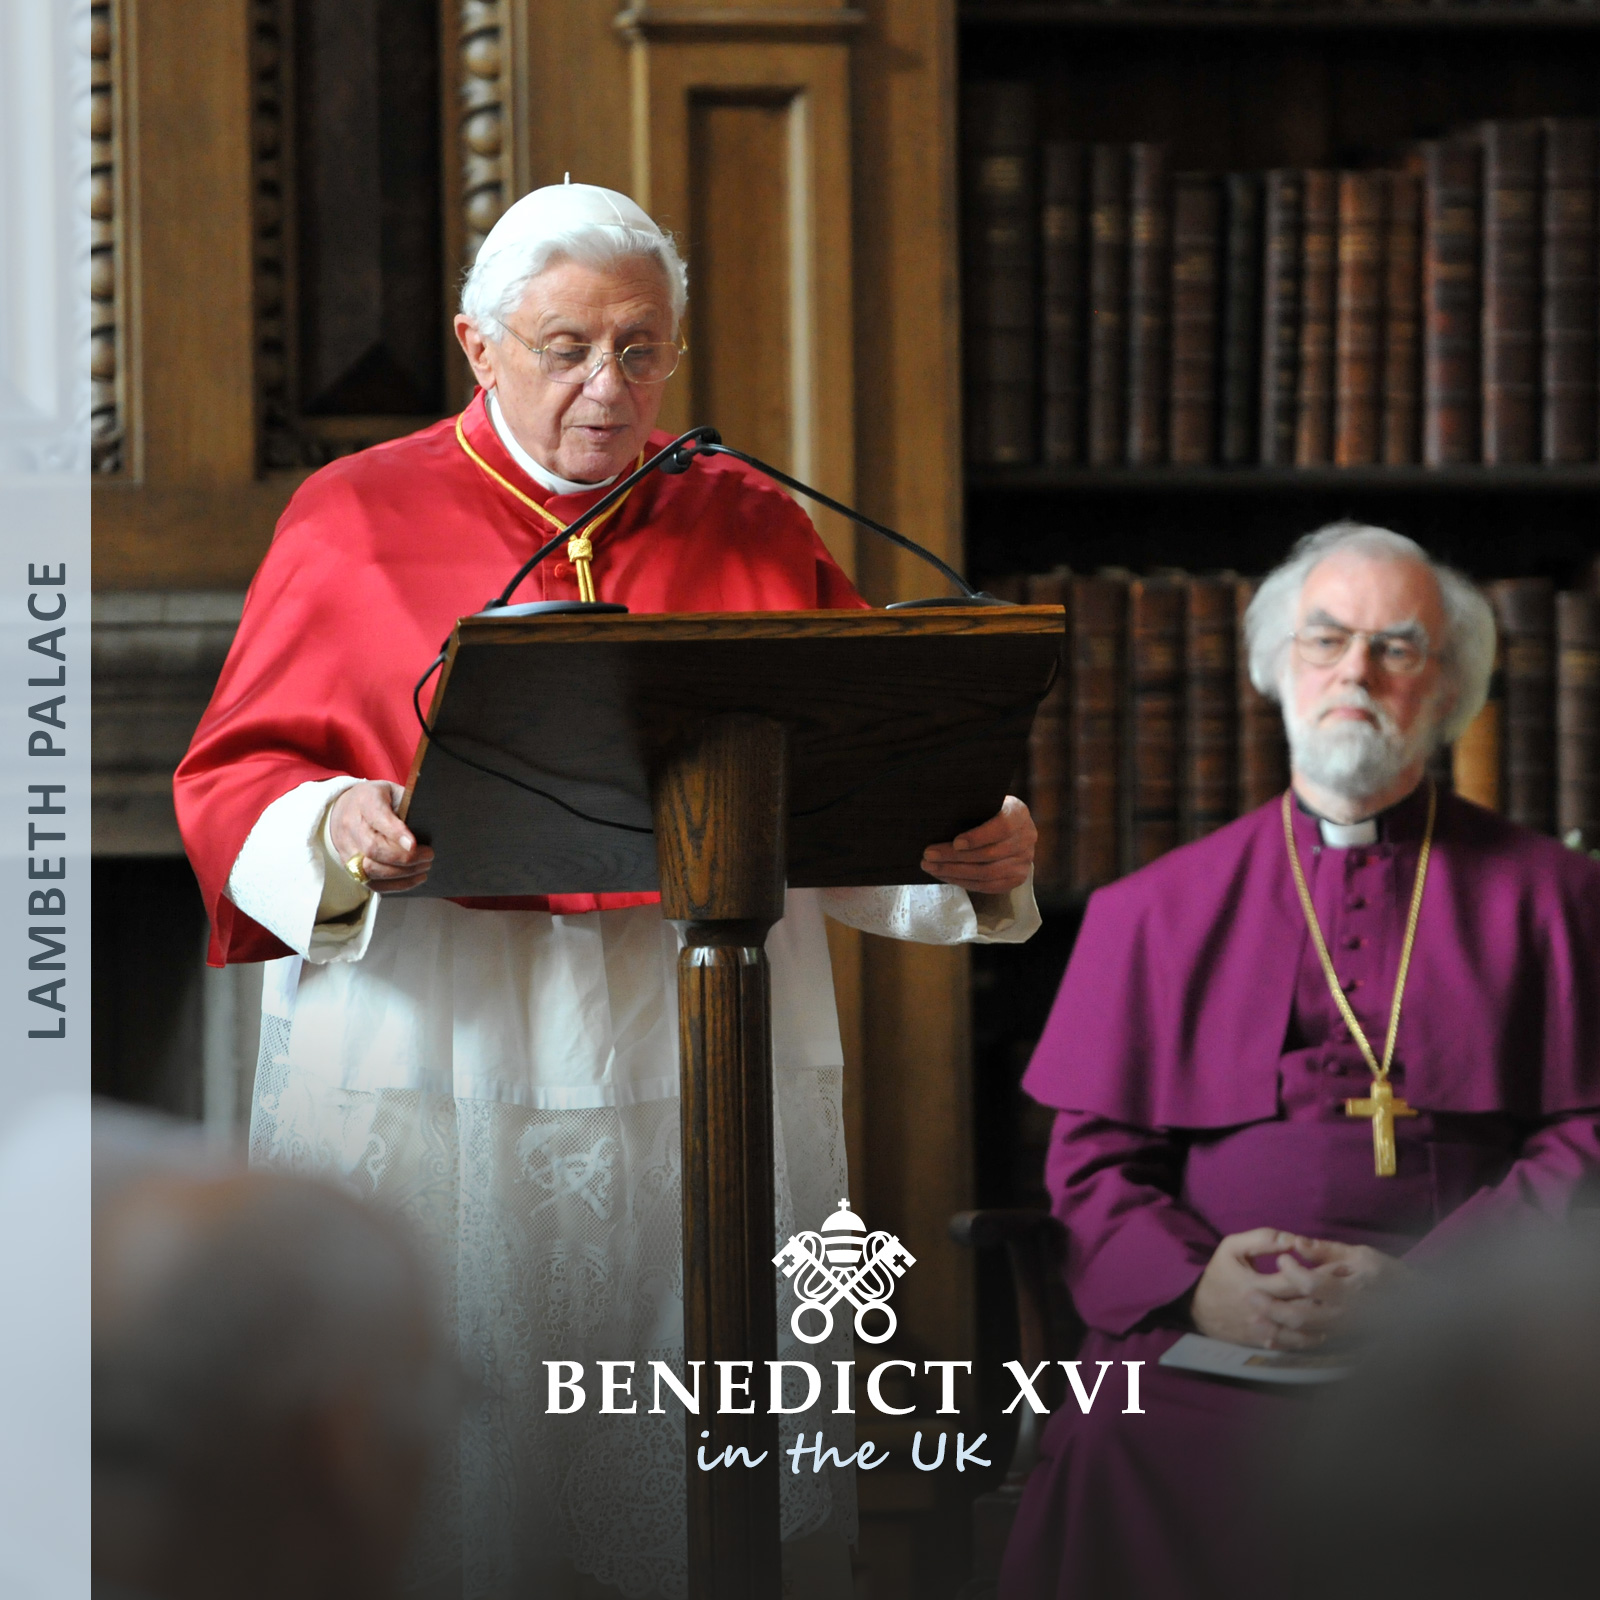 Benedict XVI addresses the Archbishop of Canterbury